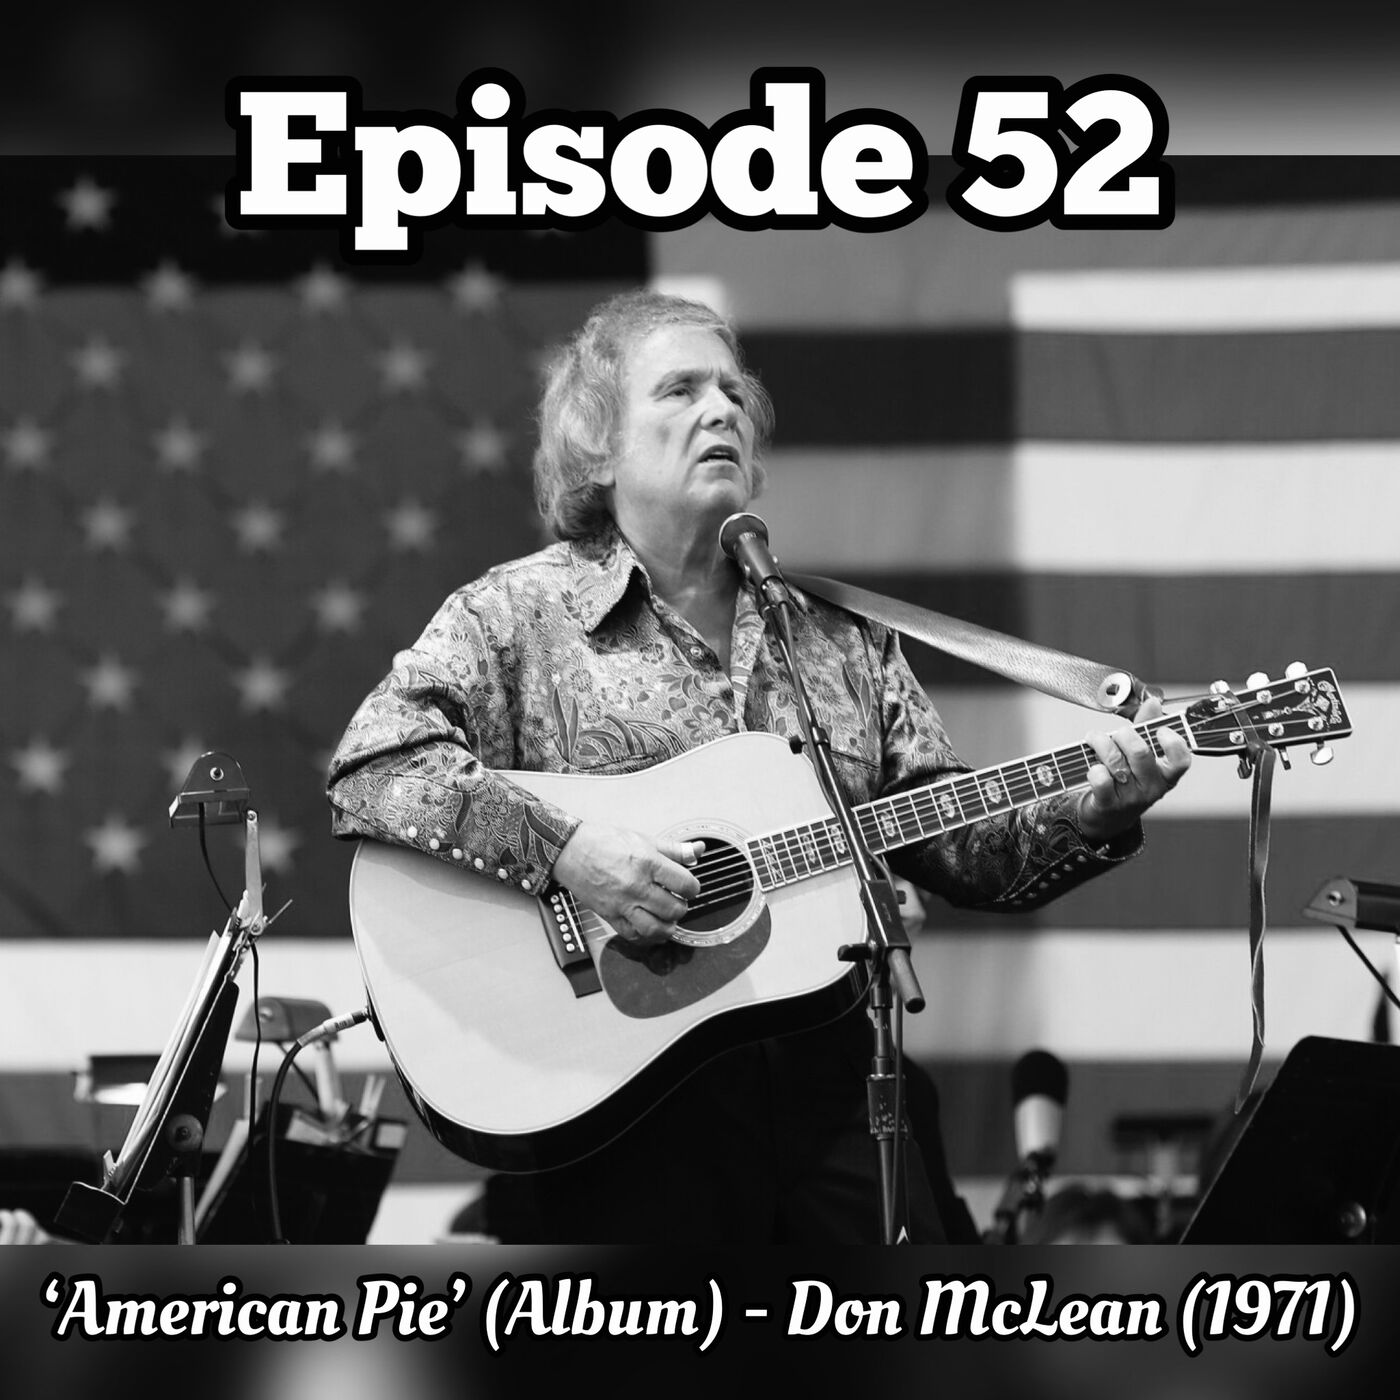 52. 'American Pie' (Album) - Don McLean (1971)